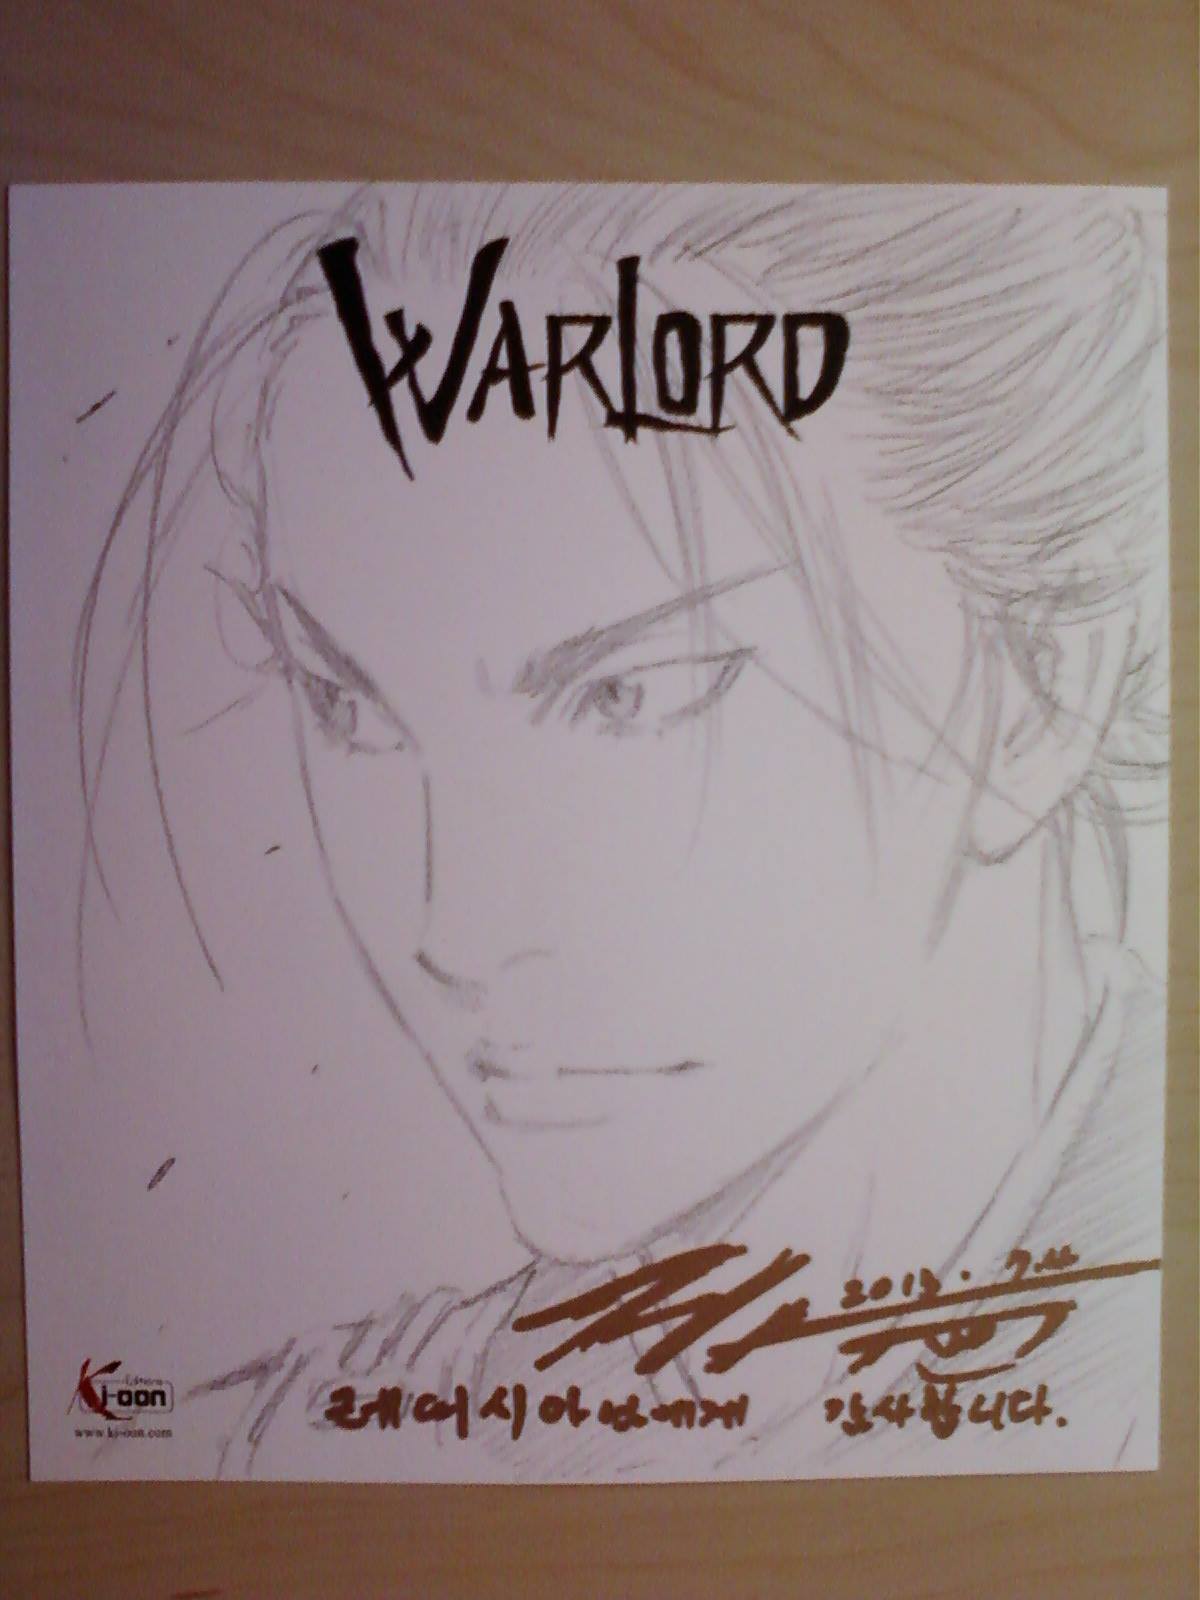 Warlord (04/07/2013)